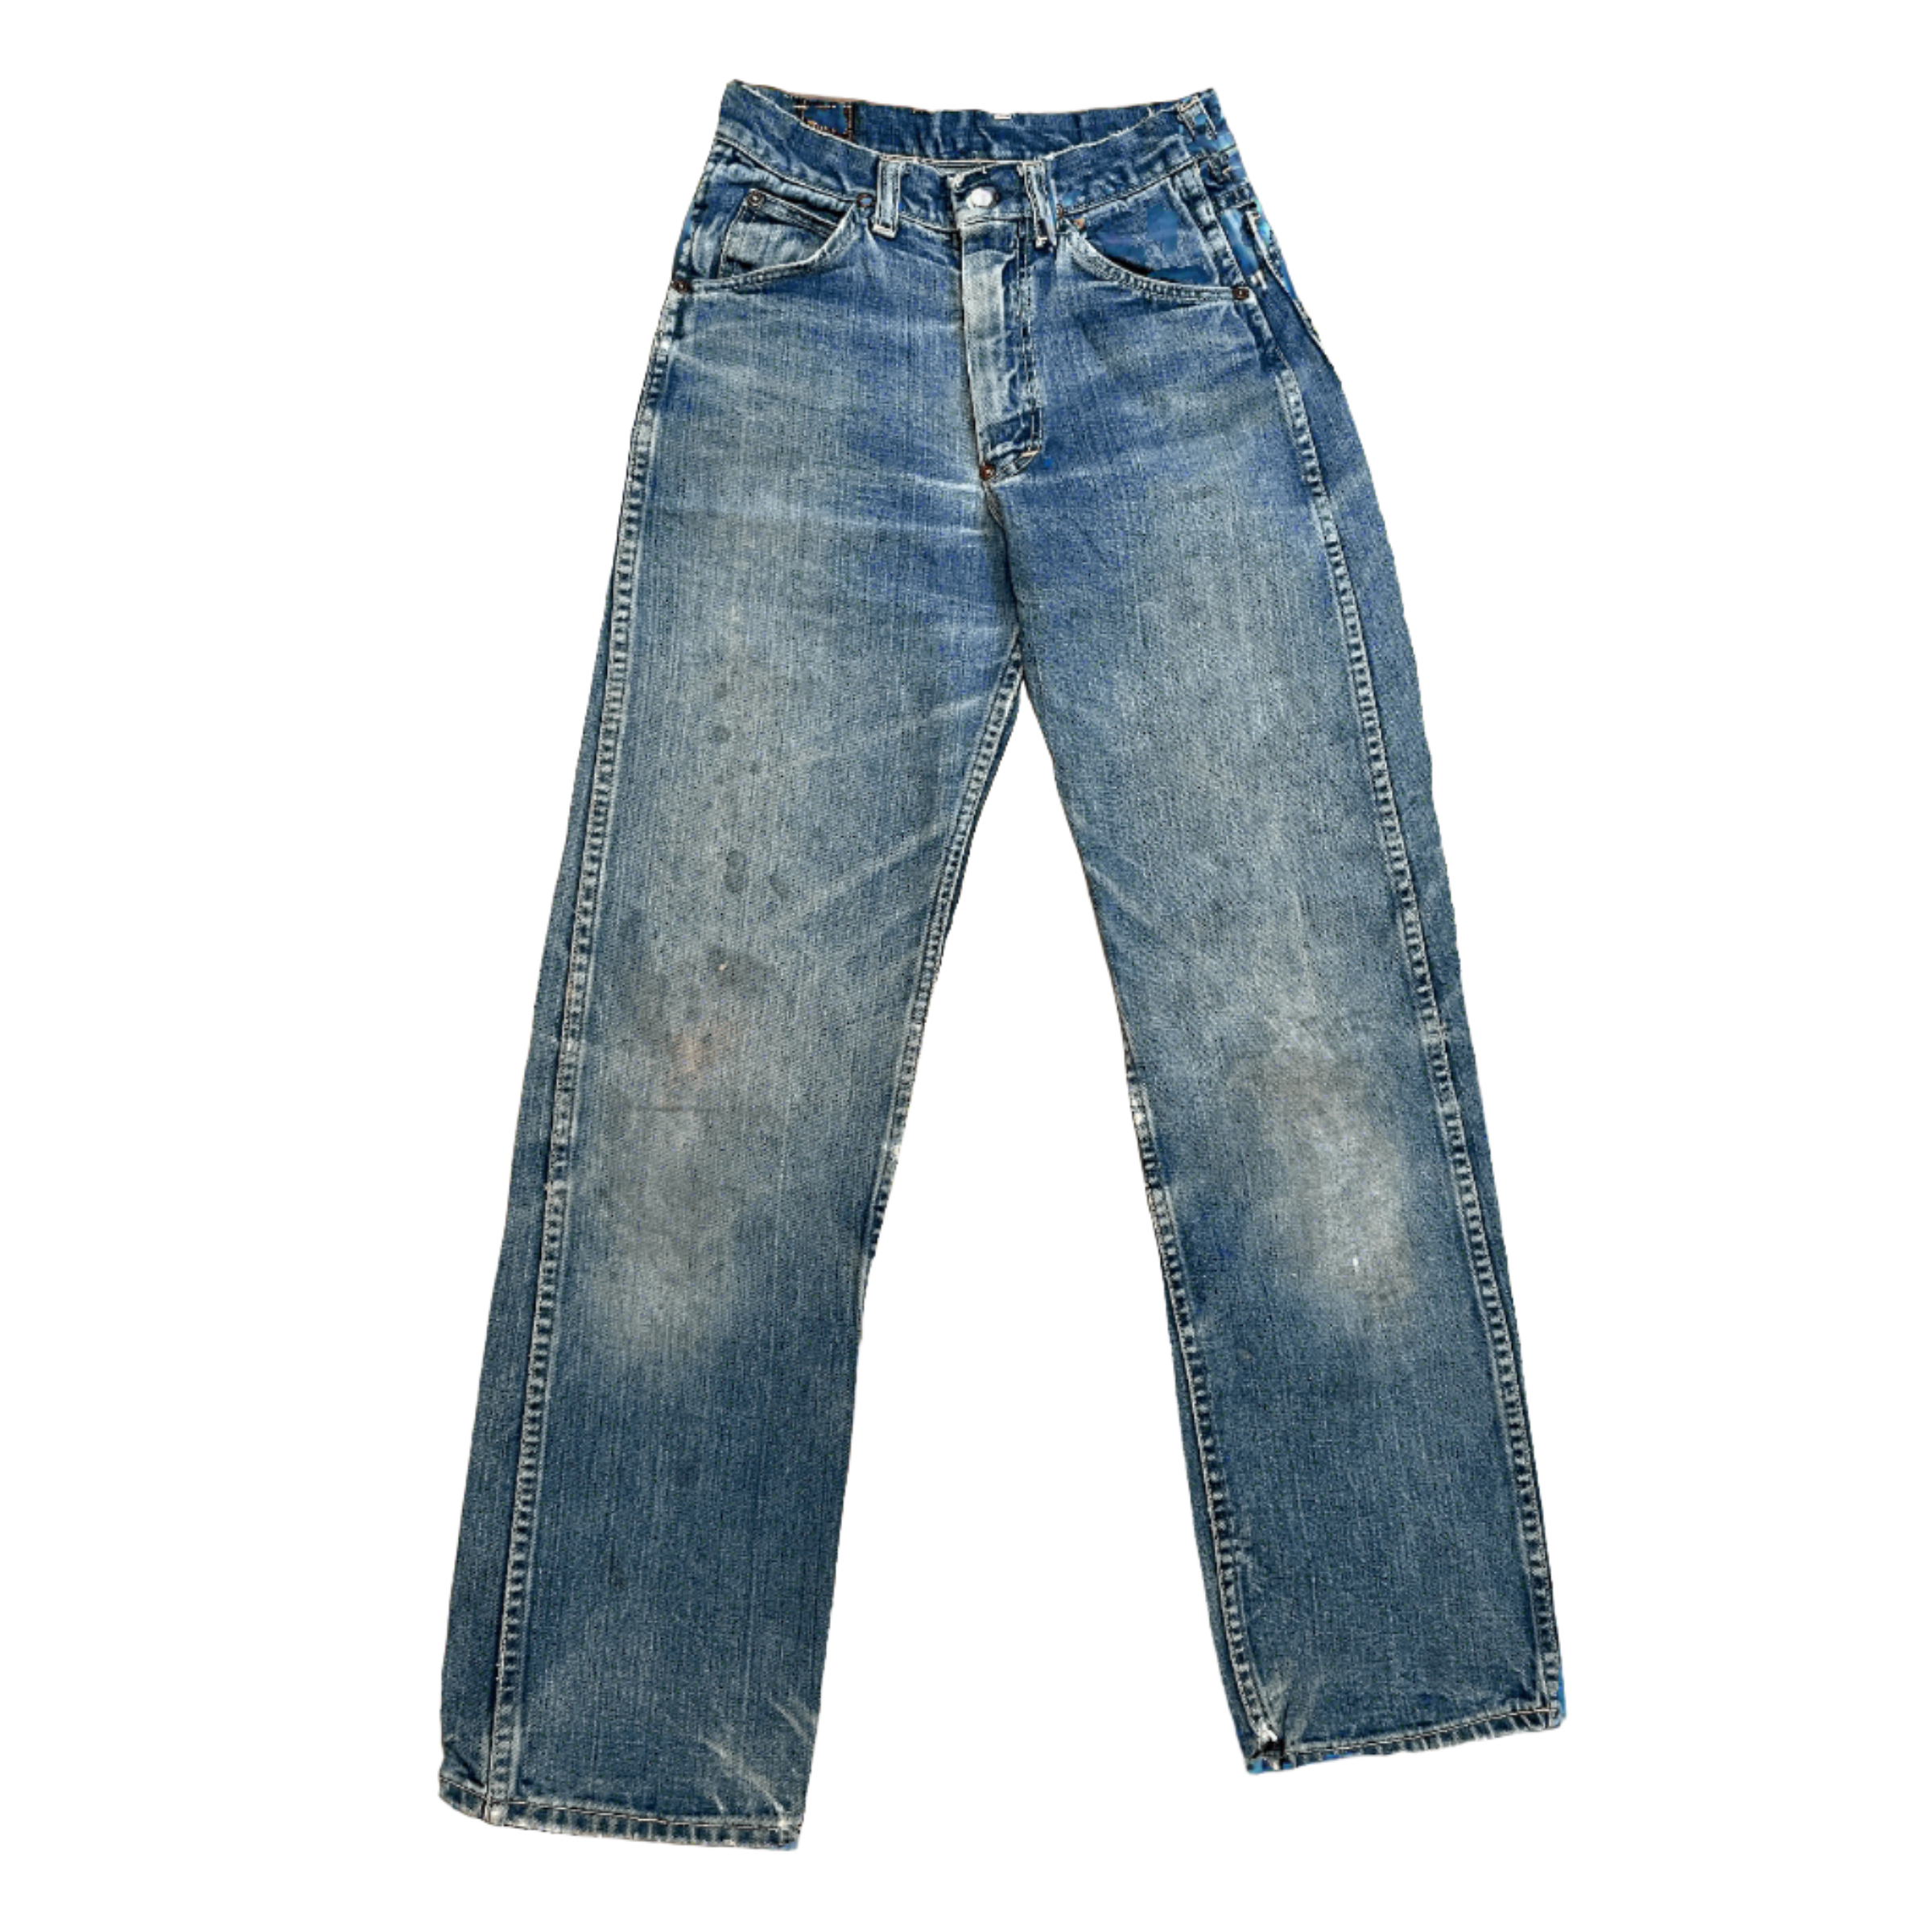 Kid's Vintage Deadstock Lee Riders Denim Jeans Made in U.S.A Sz. 10 